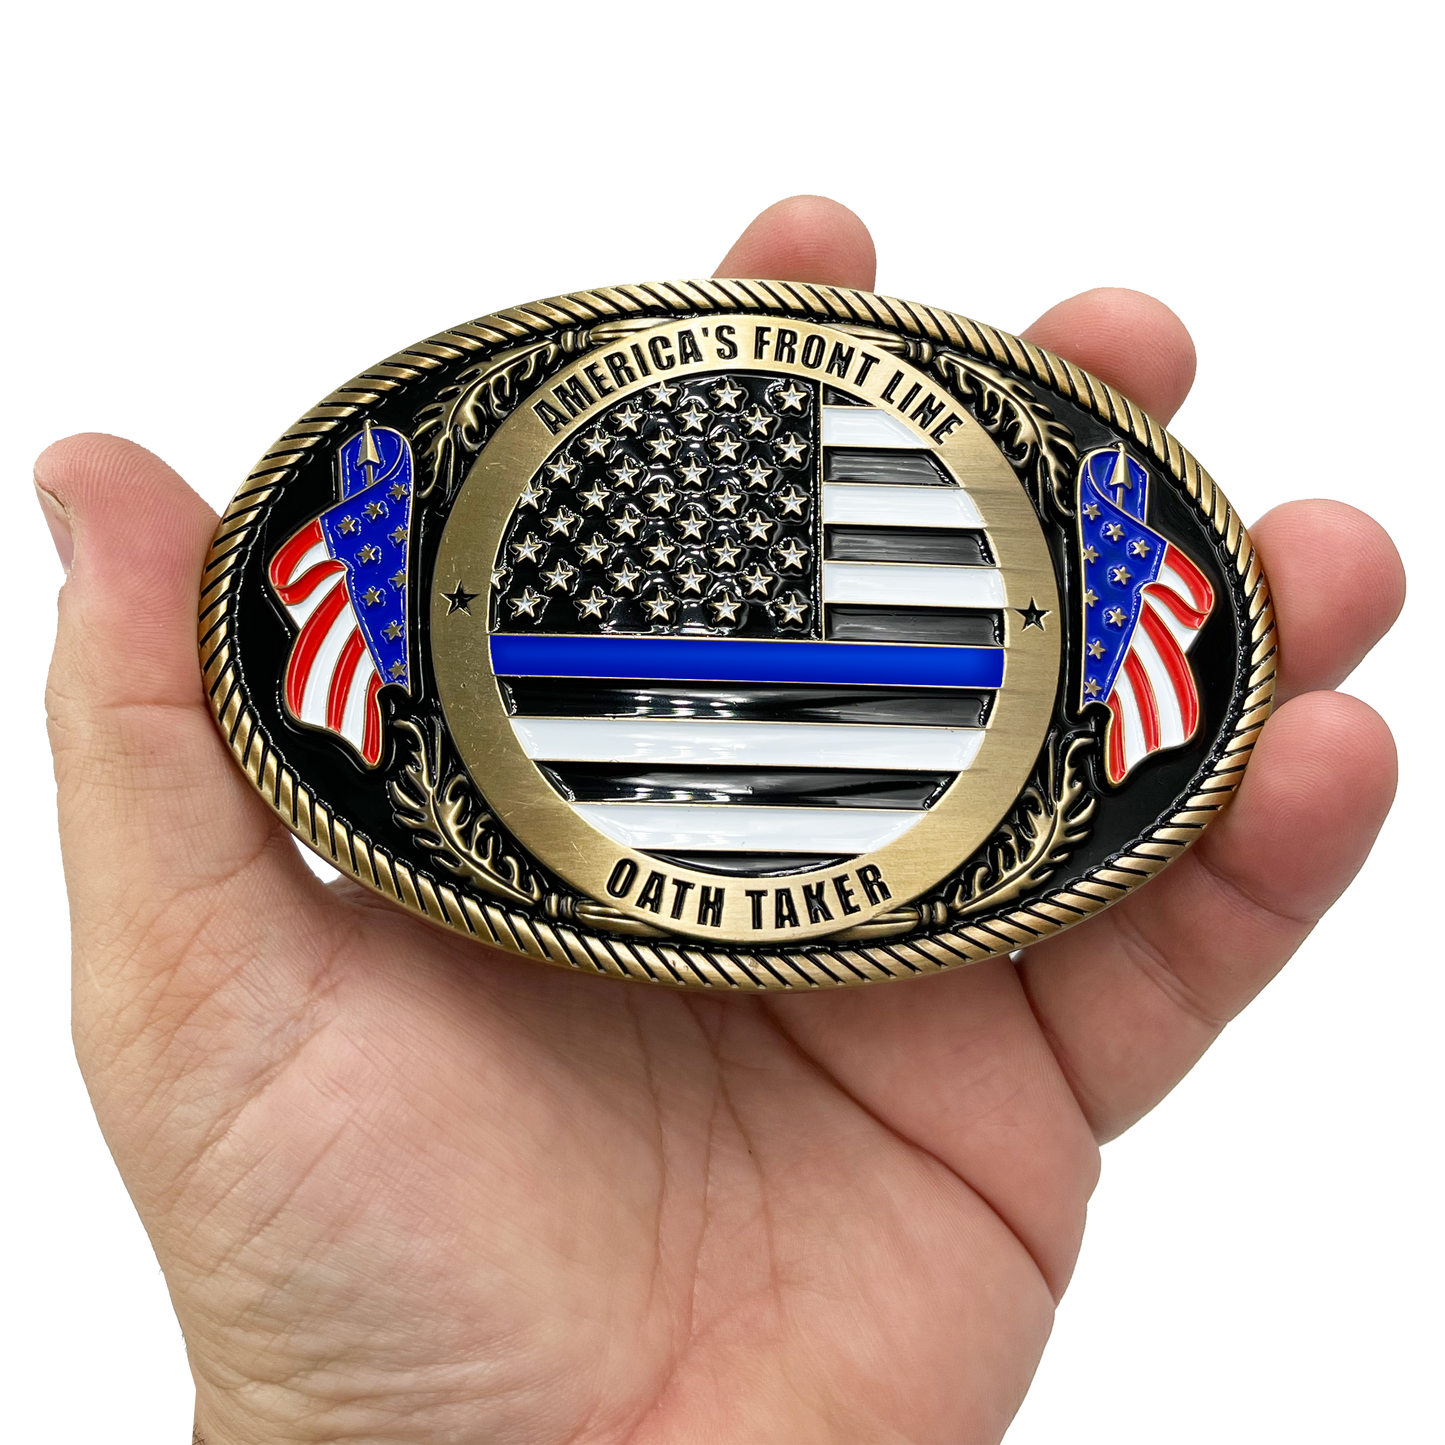 EL3-008 Police Officer Antique GOLD Thin Blue Line Police American Flag Belt Buckle America's Front Line Oath Taker